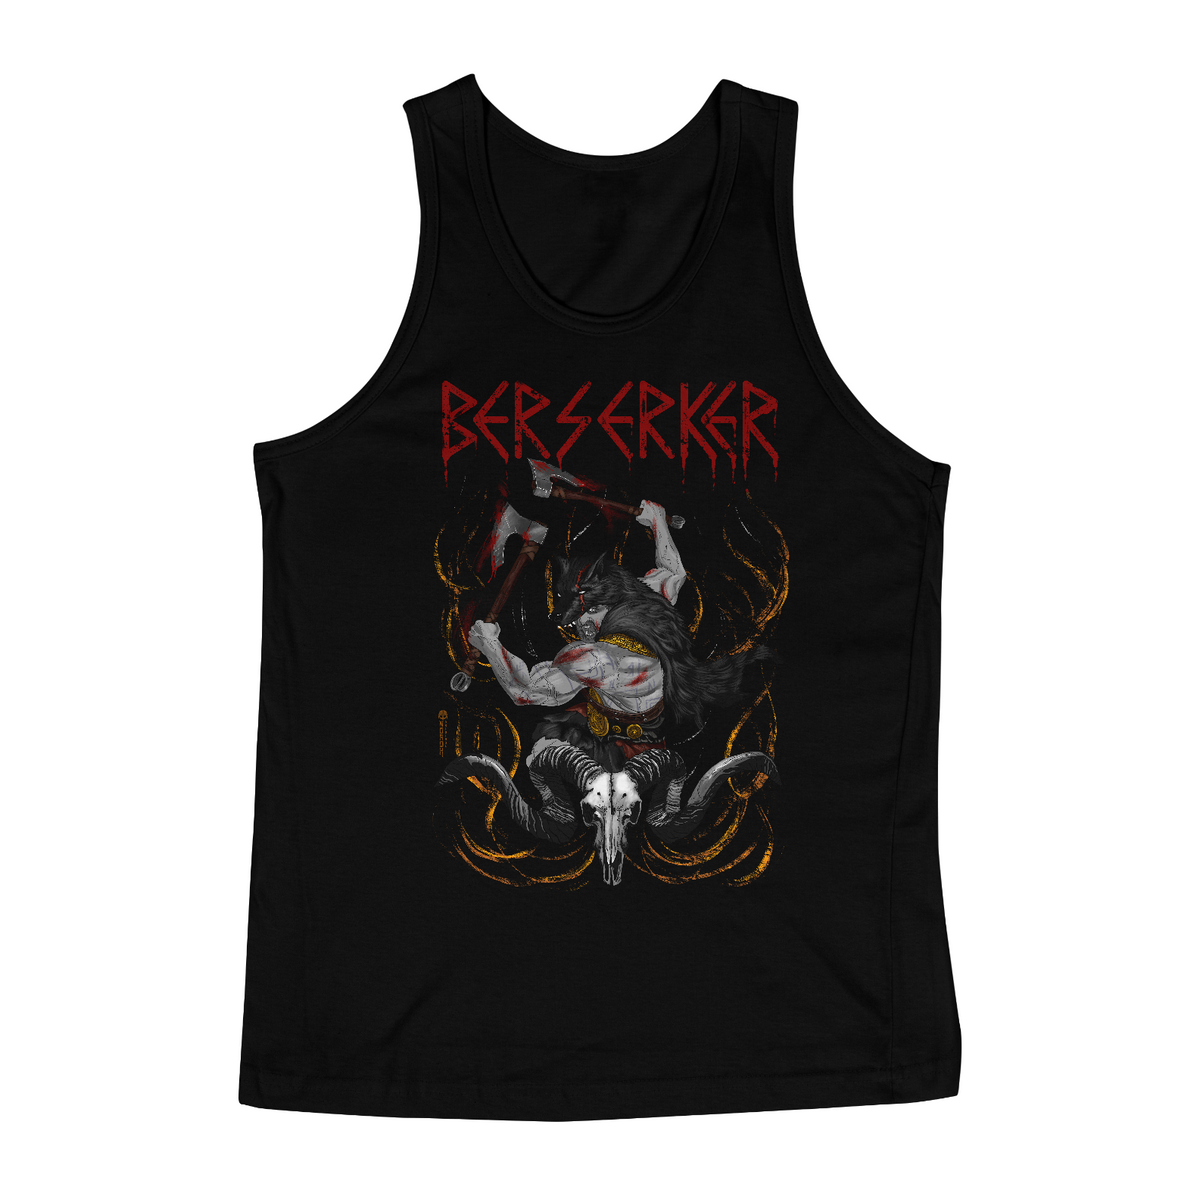 Nome do produto: Berserker